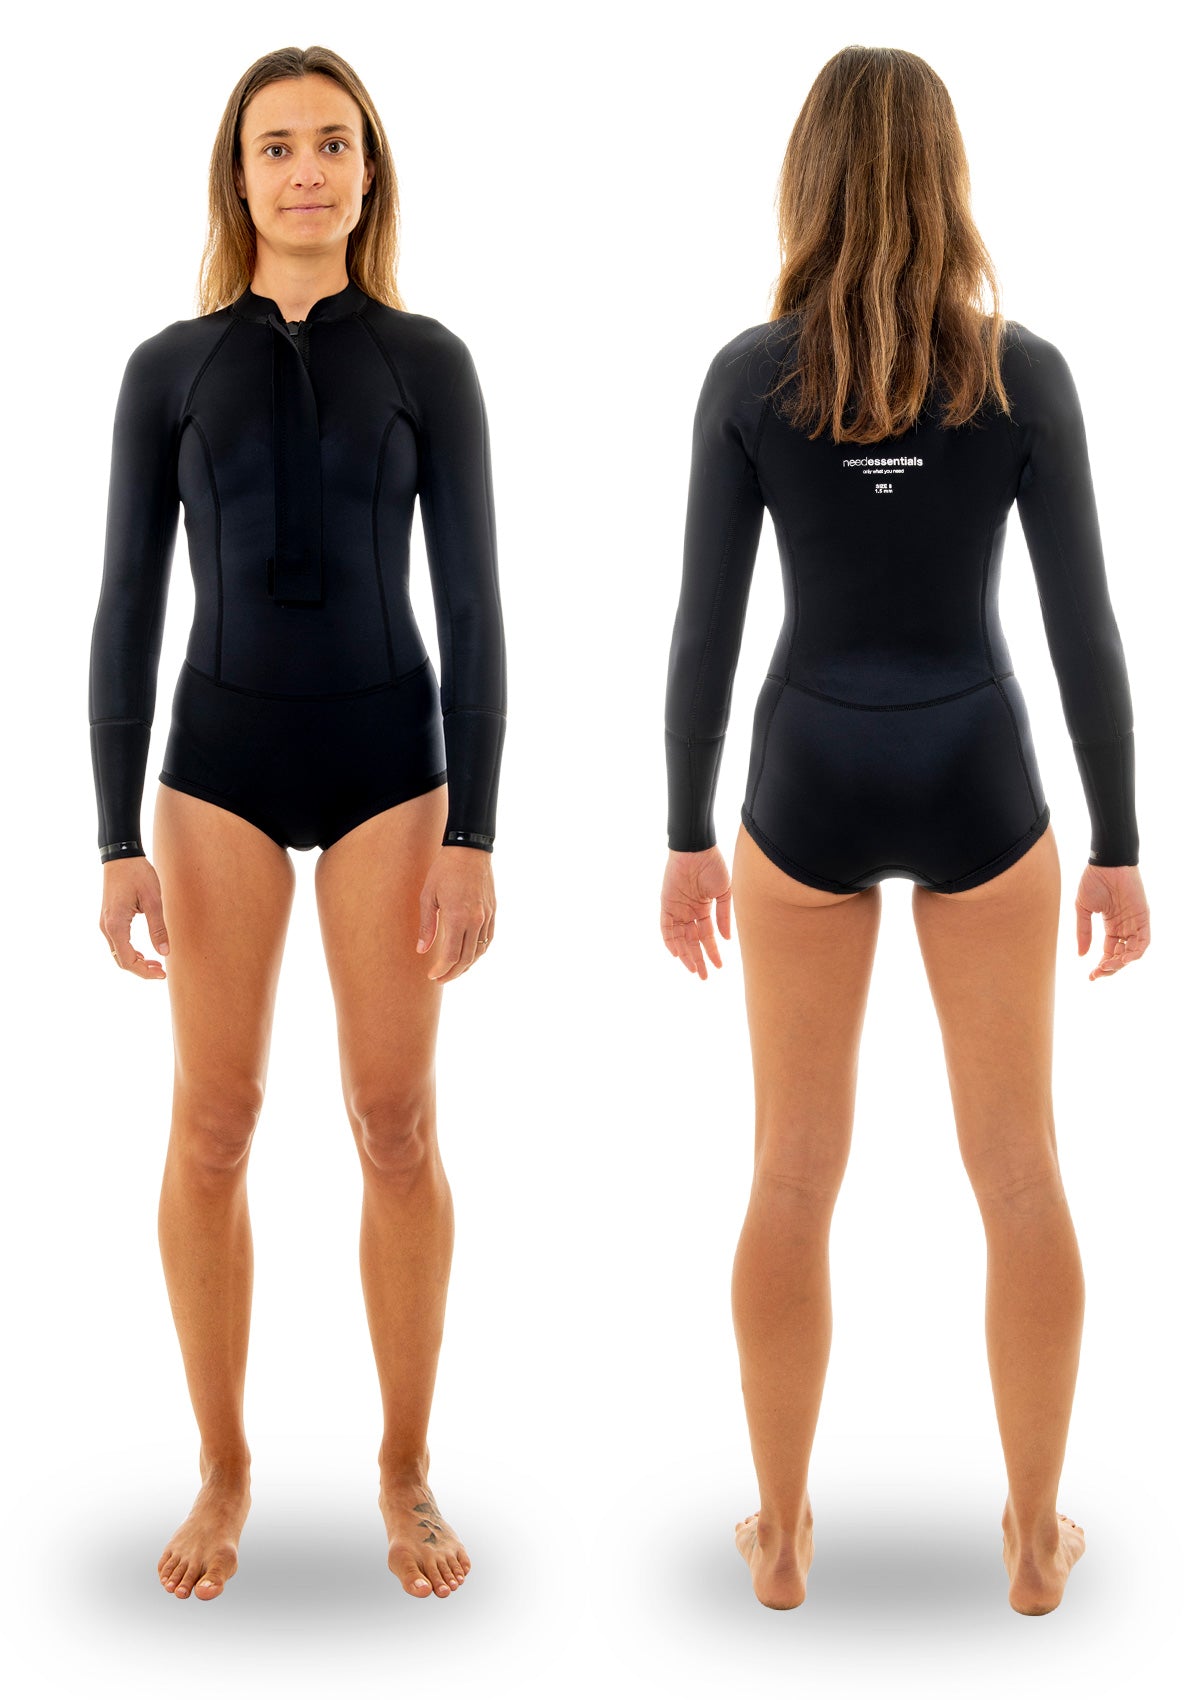 needessentials womens  1.5mm front zip springsuit summer wetsuit surfing